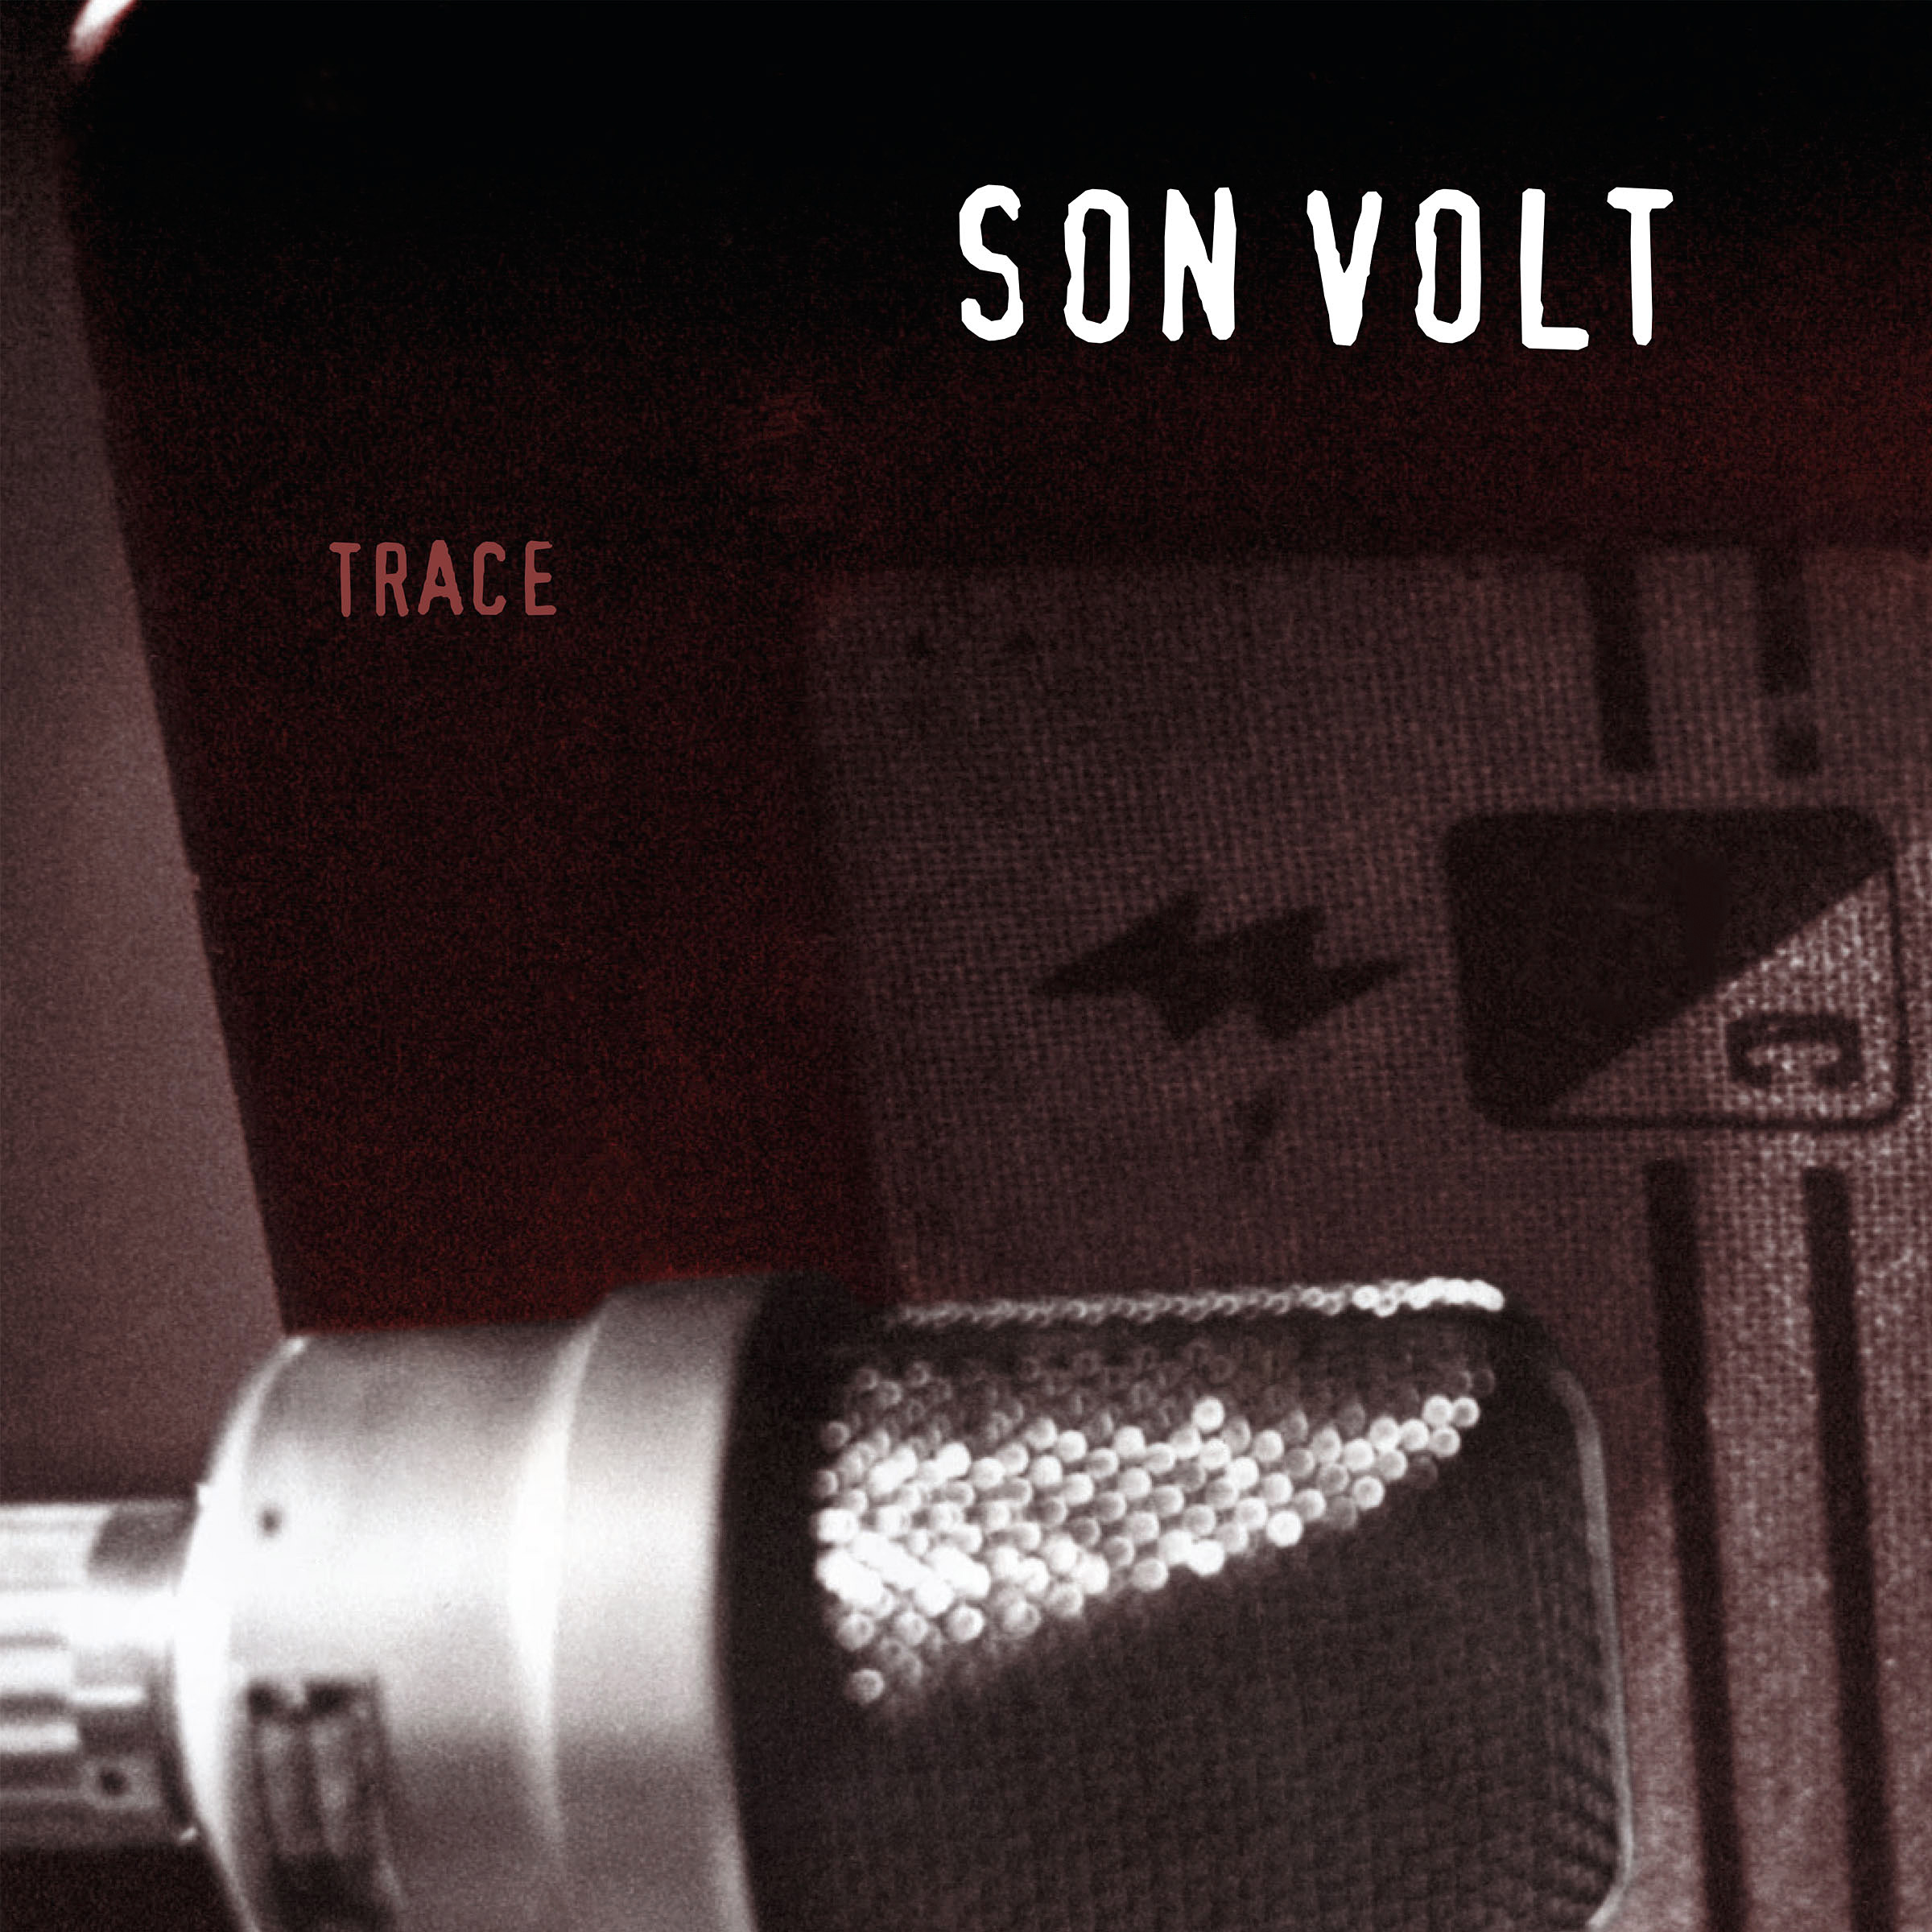 Son Volt – Trace (1995) [Expanded & Remastered 2015] [HDTracks FLAC 24bit/96kHz]